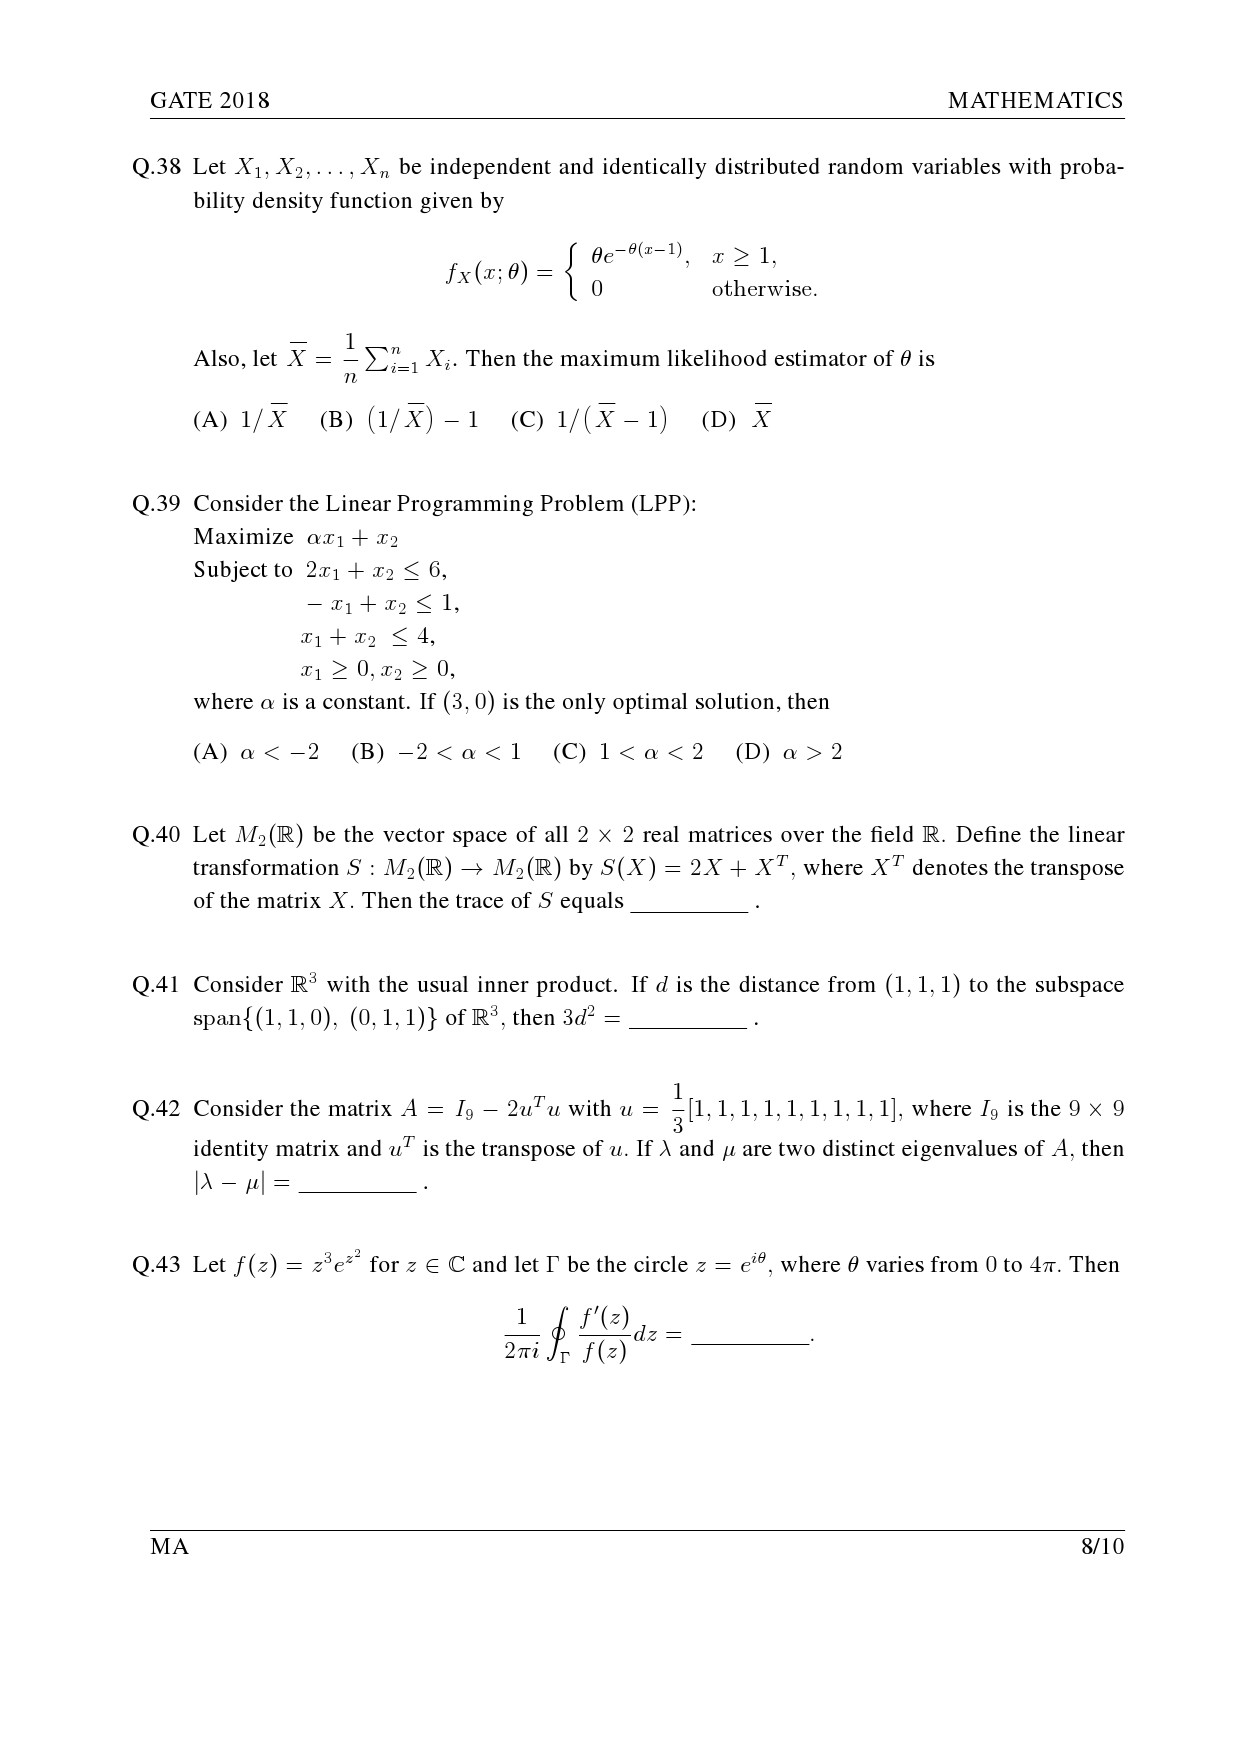 GATE Exam Question Paper 2018 Mathematics 11